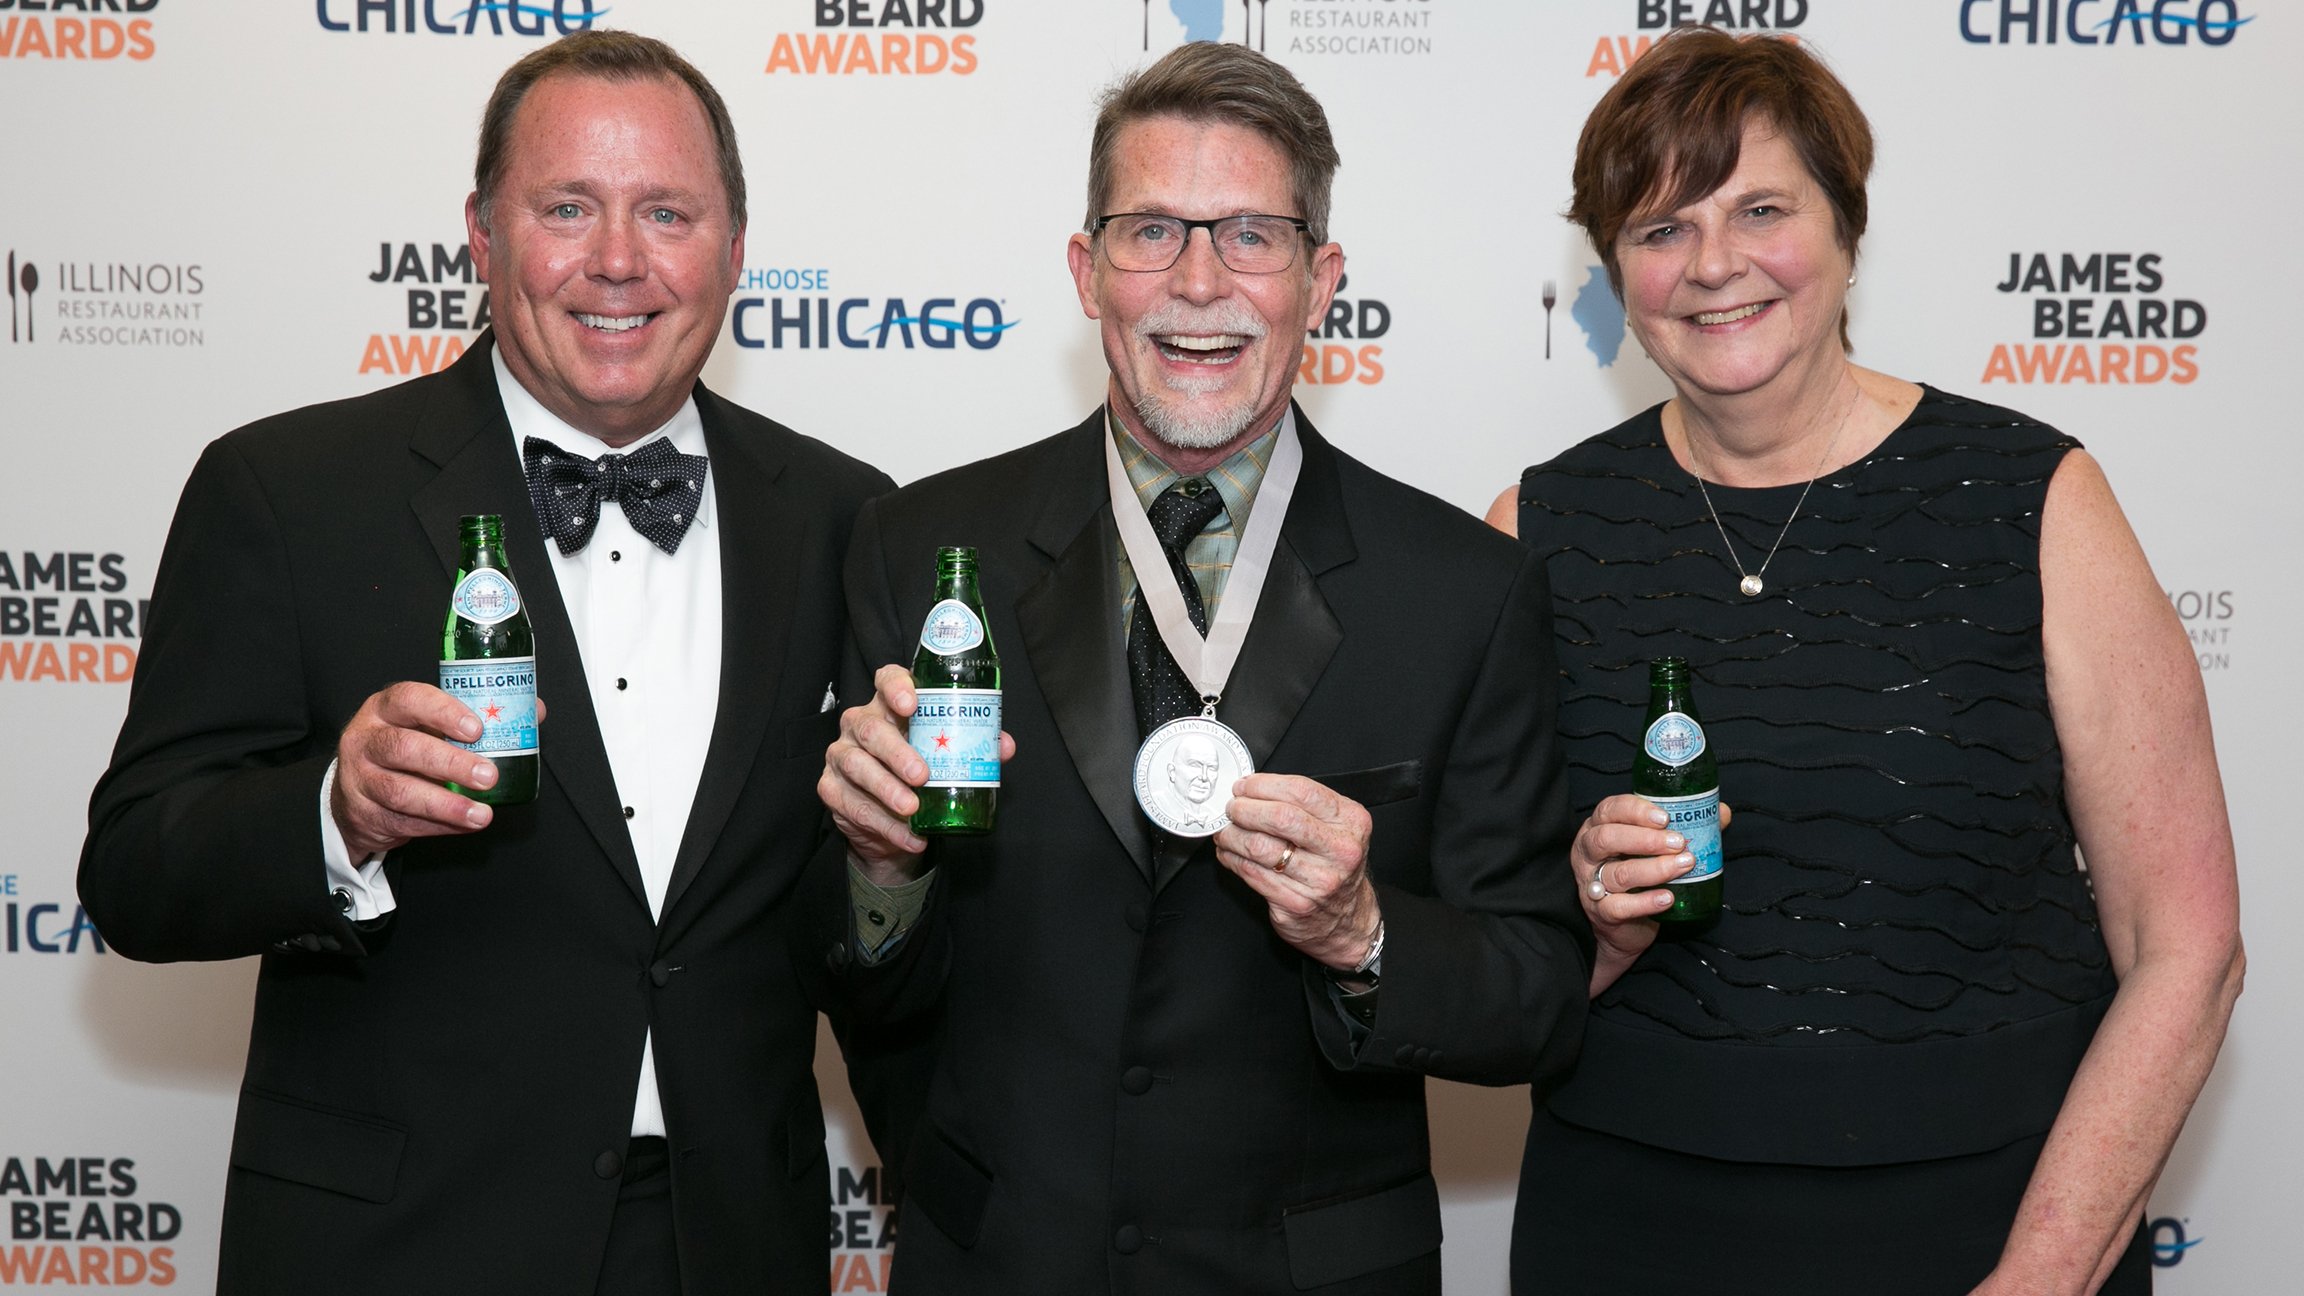 Rick Bayless, Sarah Grueneberg Win Awards at 'Oscars' of Food Industry |  Chicago News | WTTW